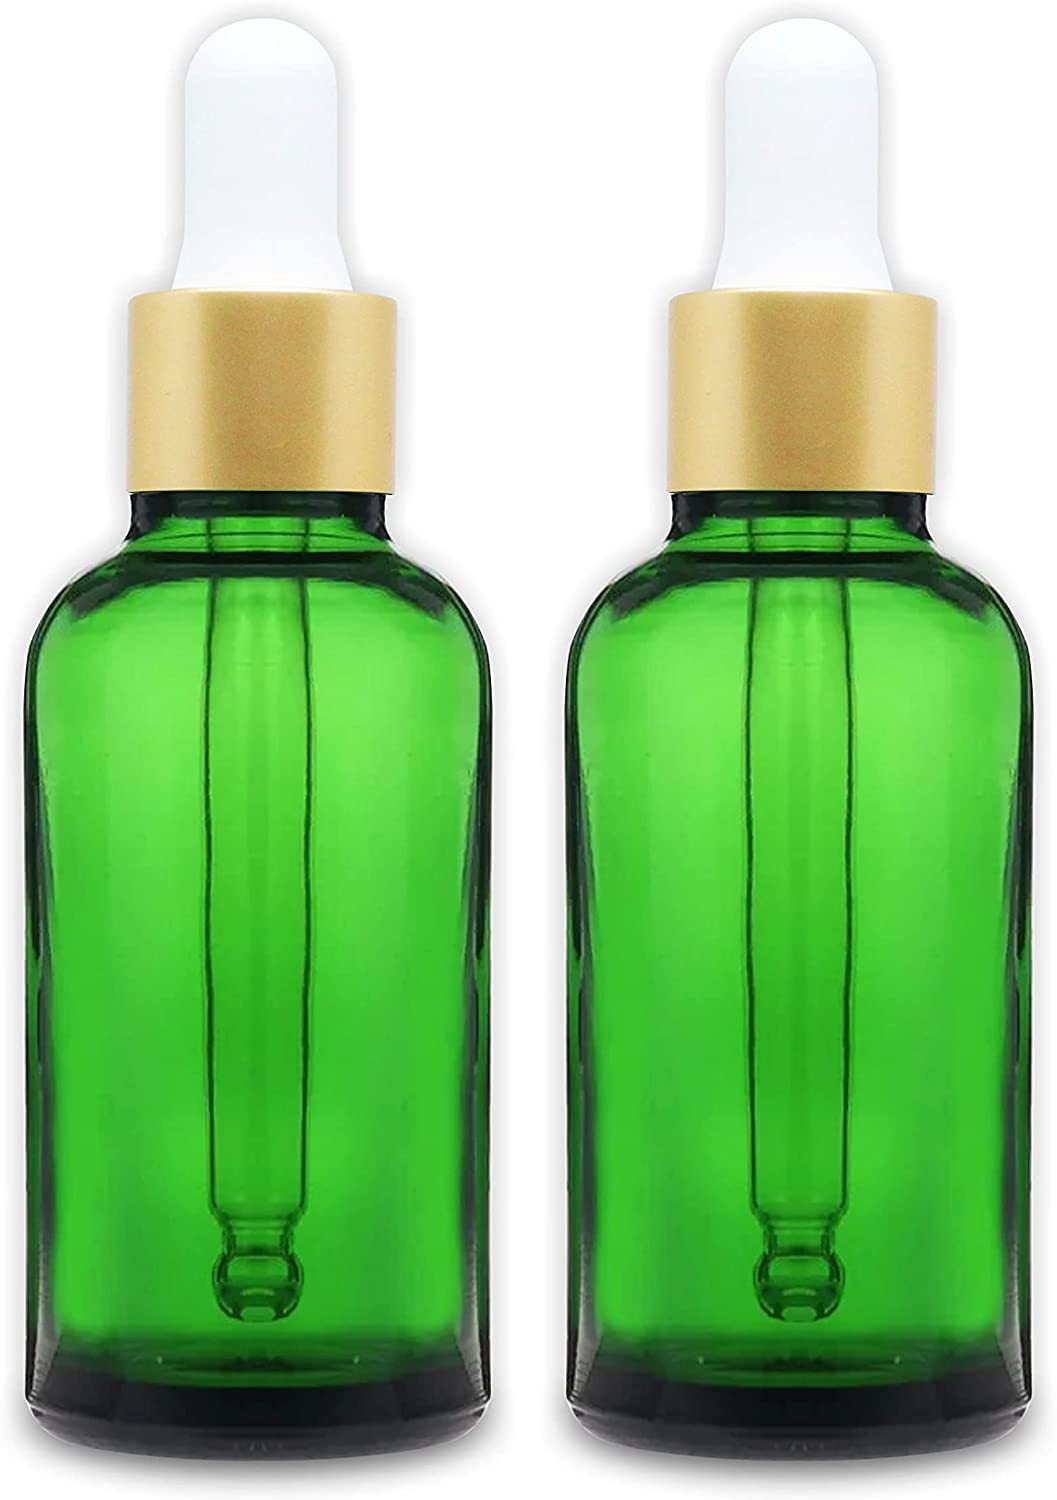 1 Oz. (30 ml) Green Glass Bottle, Free Shipping